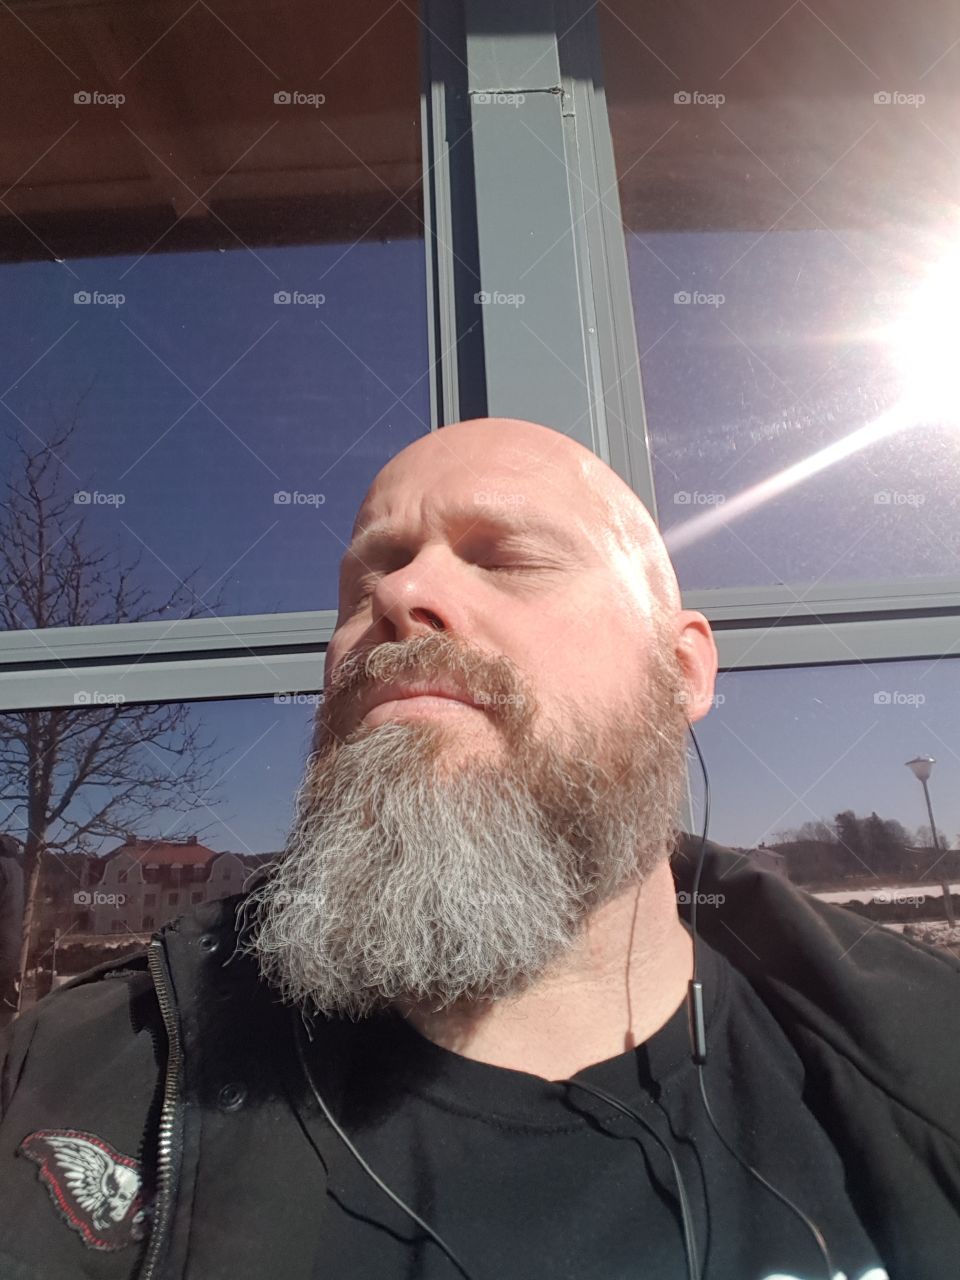 Sun
Beard
Daylight
Window
Spring